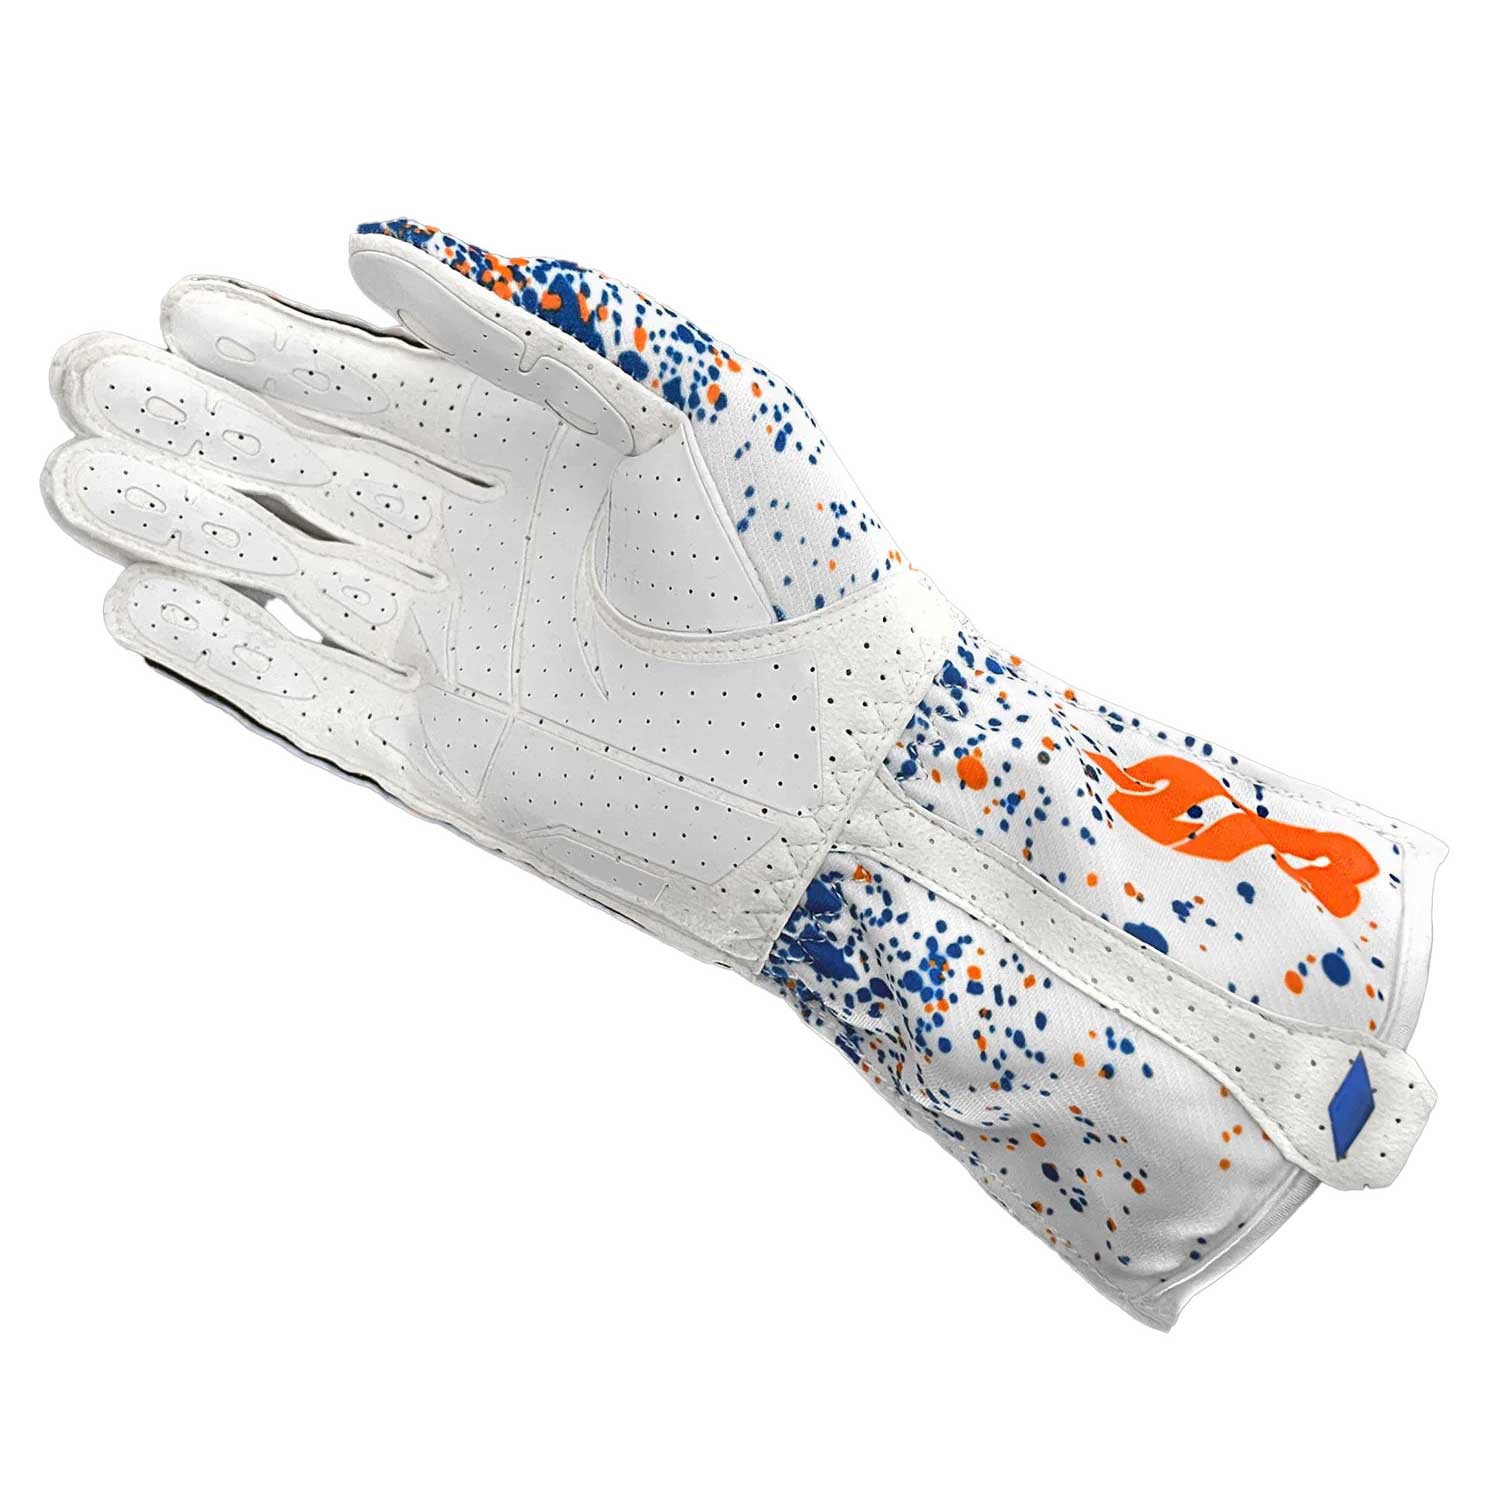 Minus 273 Kart Racing Gloves Drip White-Orange-Blue- helmade Motorsports  Add-ons